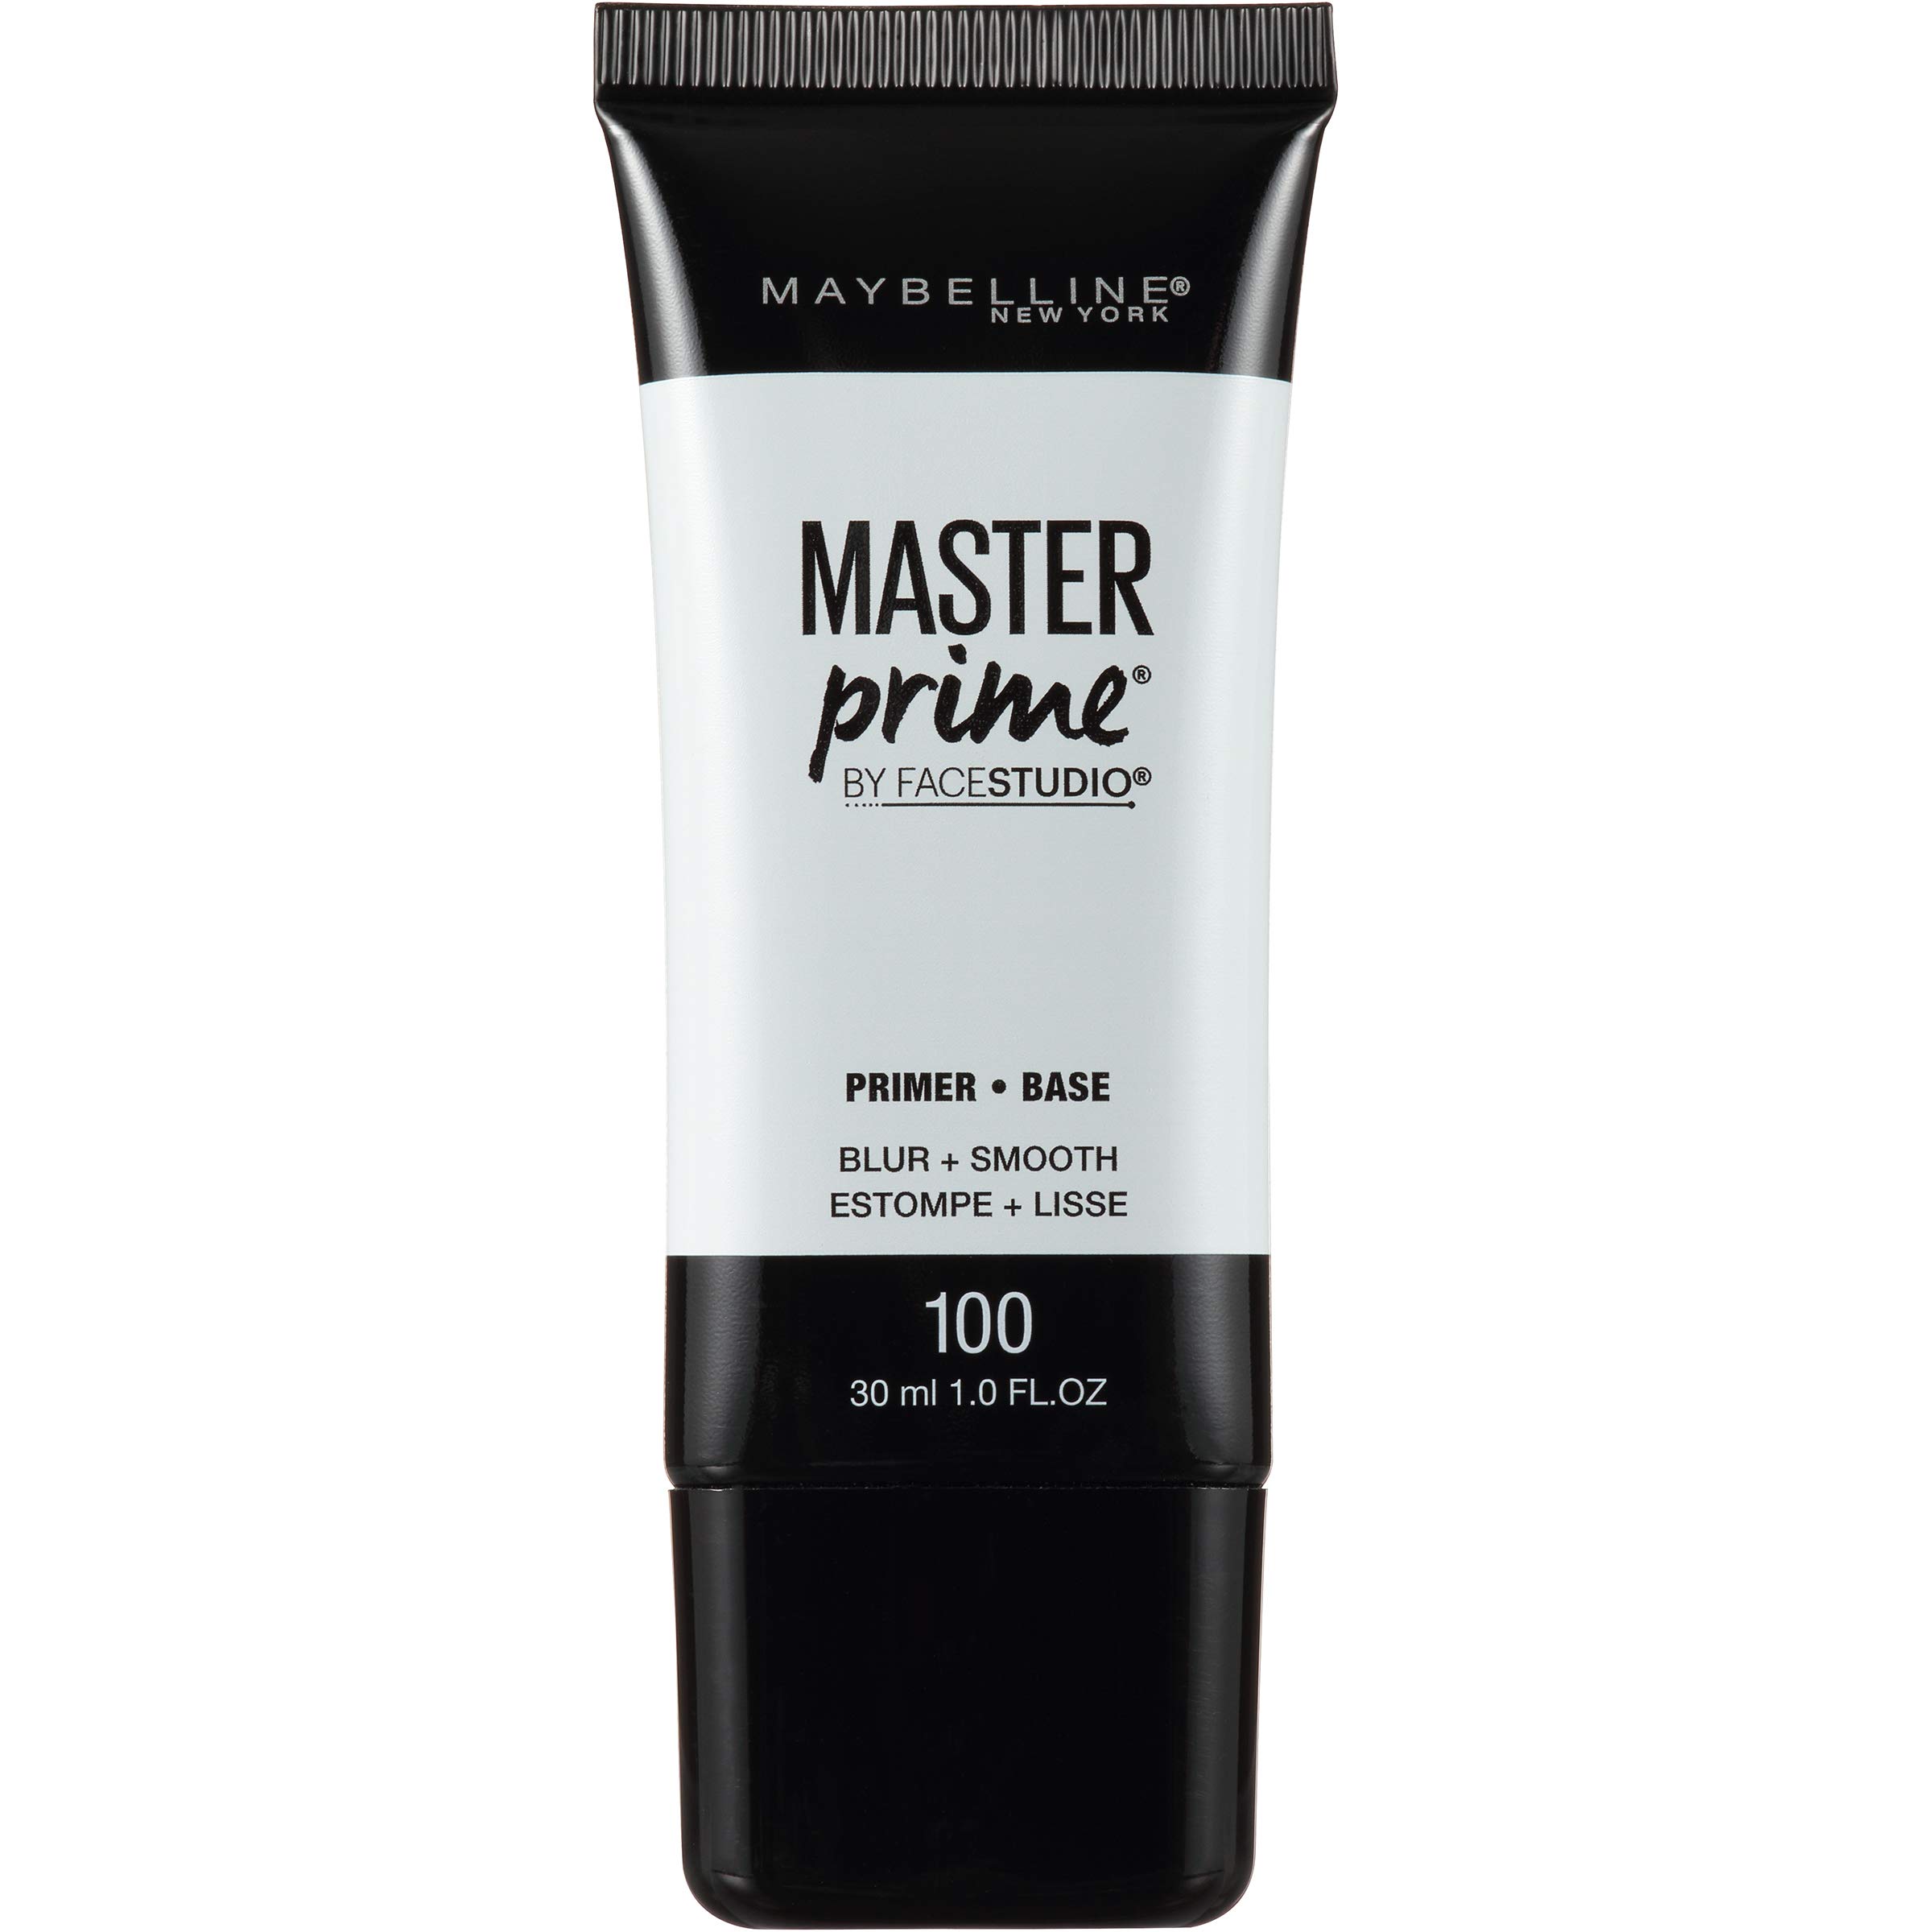 Maybelline New York Face Studio Master Prime Face Primer Makeup Base, Blur + Smooth, 1 Count